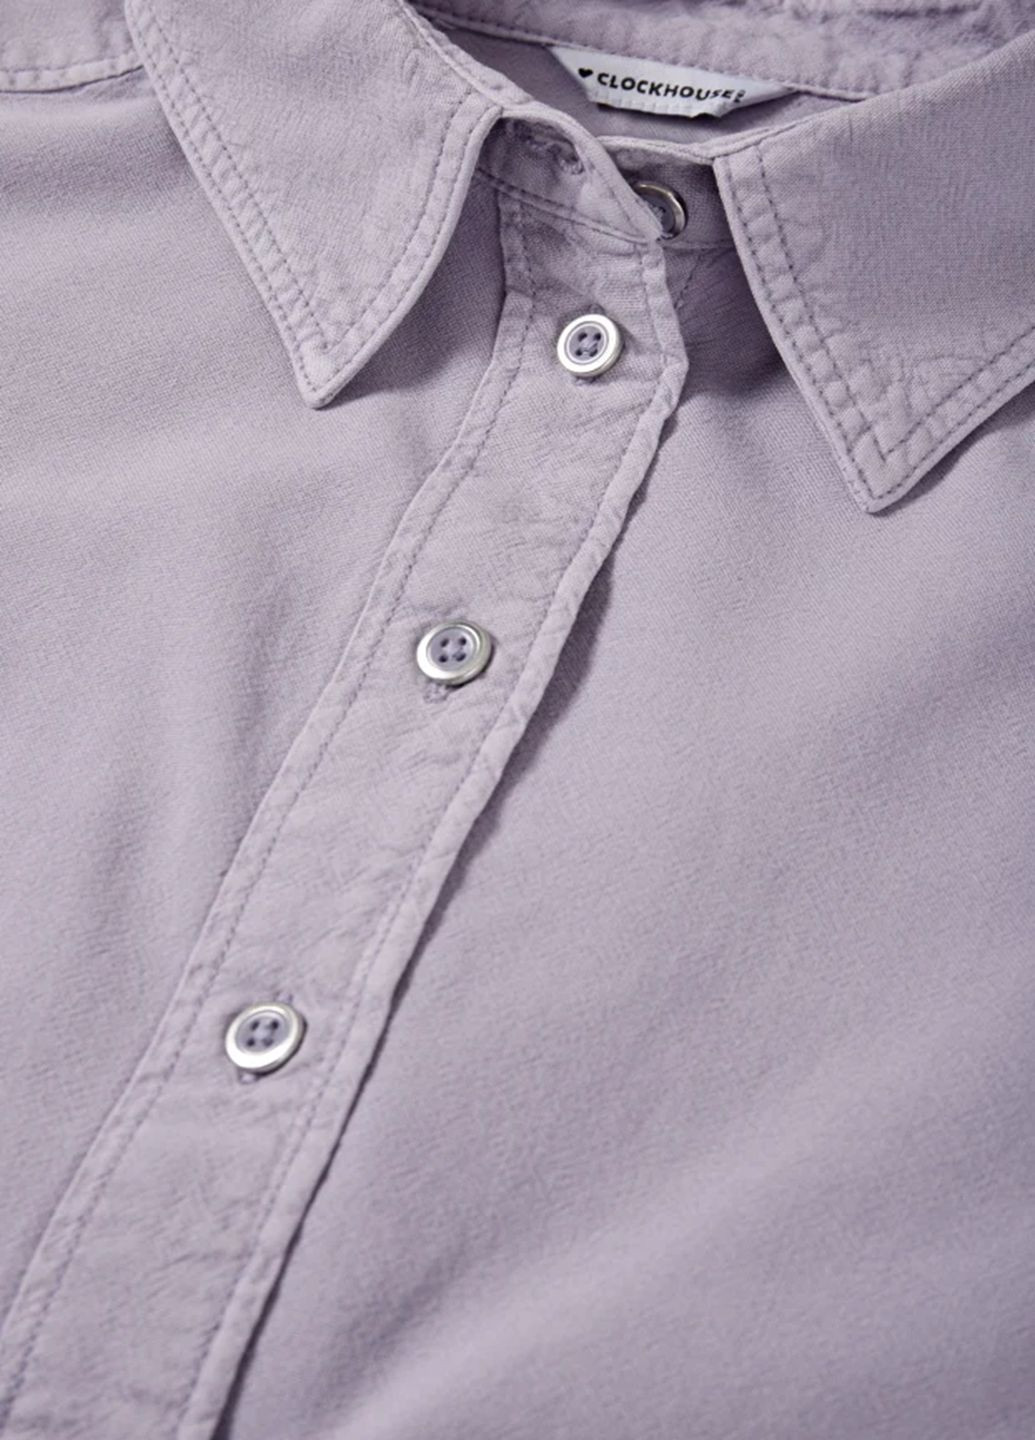 Фіолетова літня блузка C&A